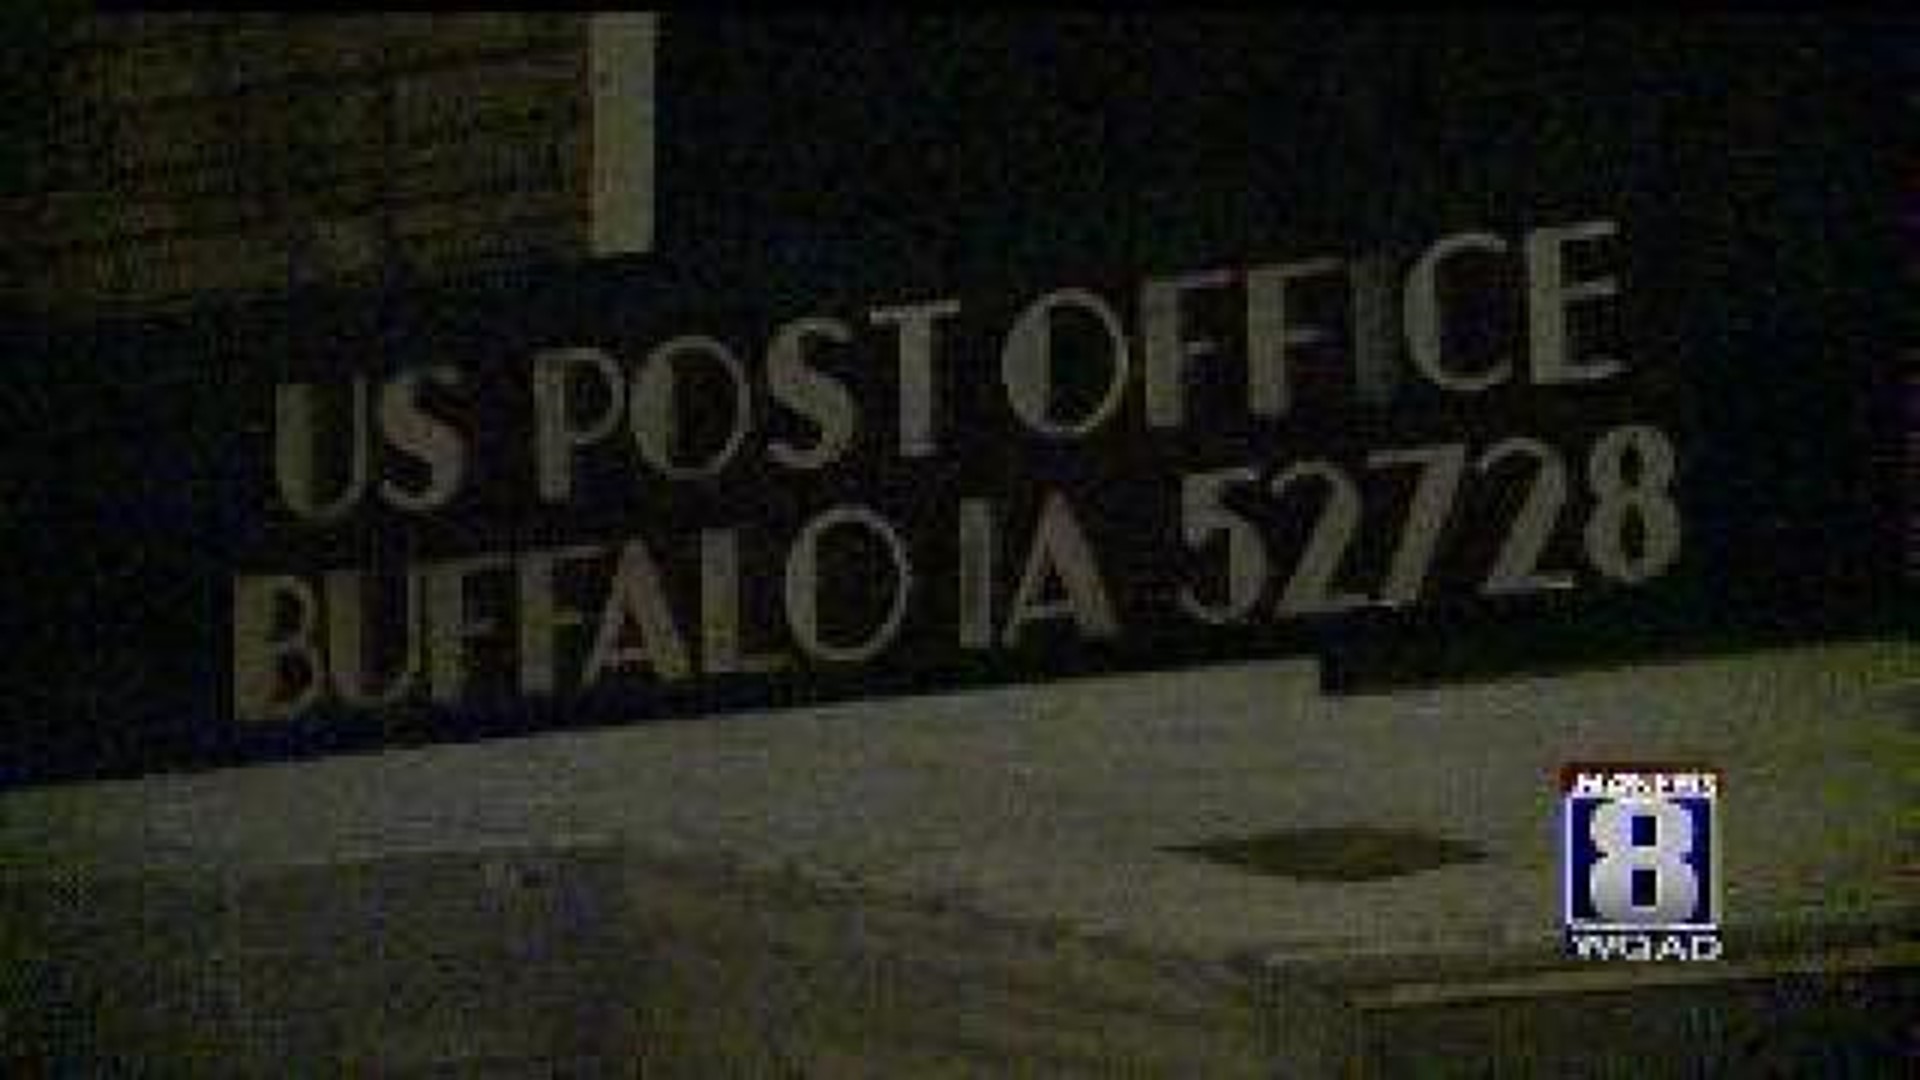 Buffalo, Iowa Keeps Post Office, Reduces Hours